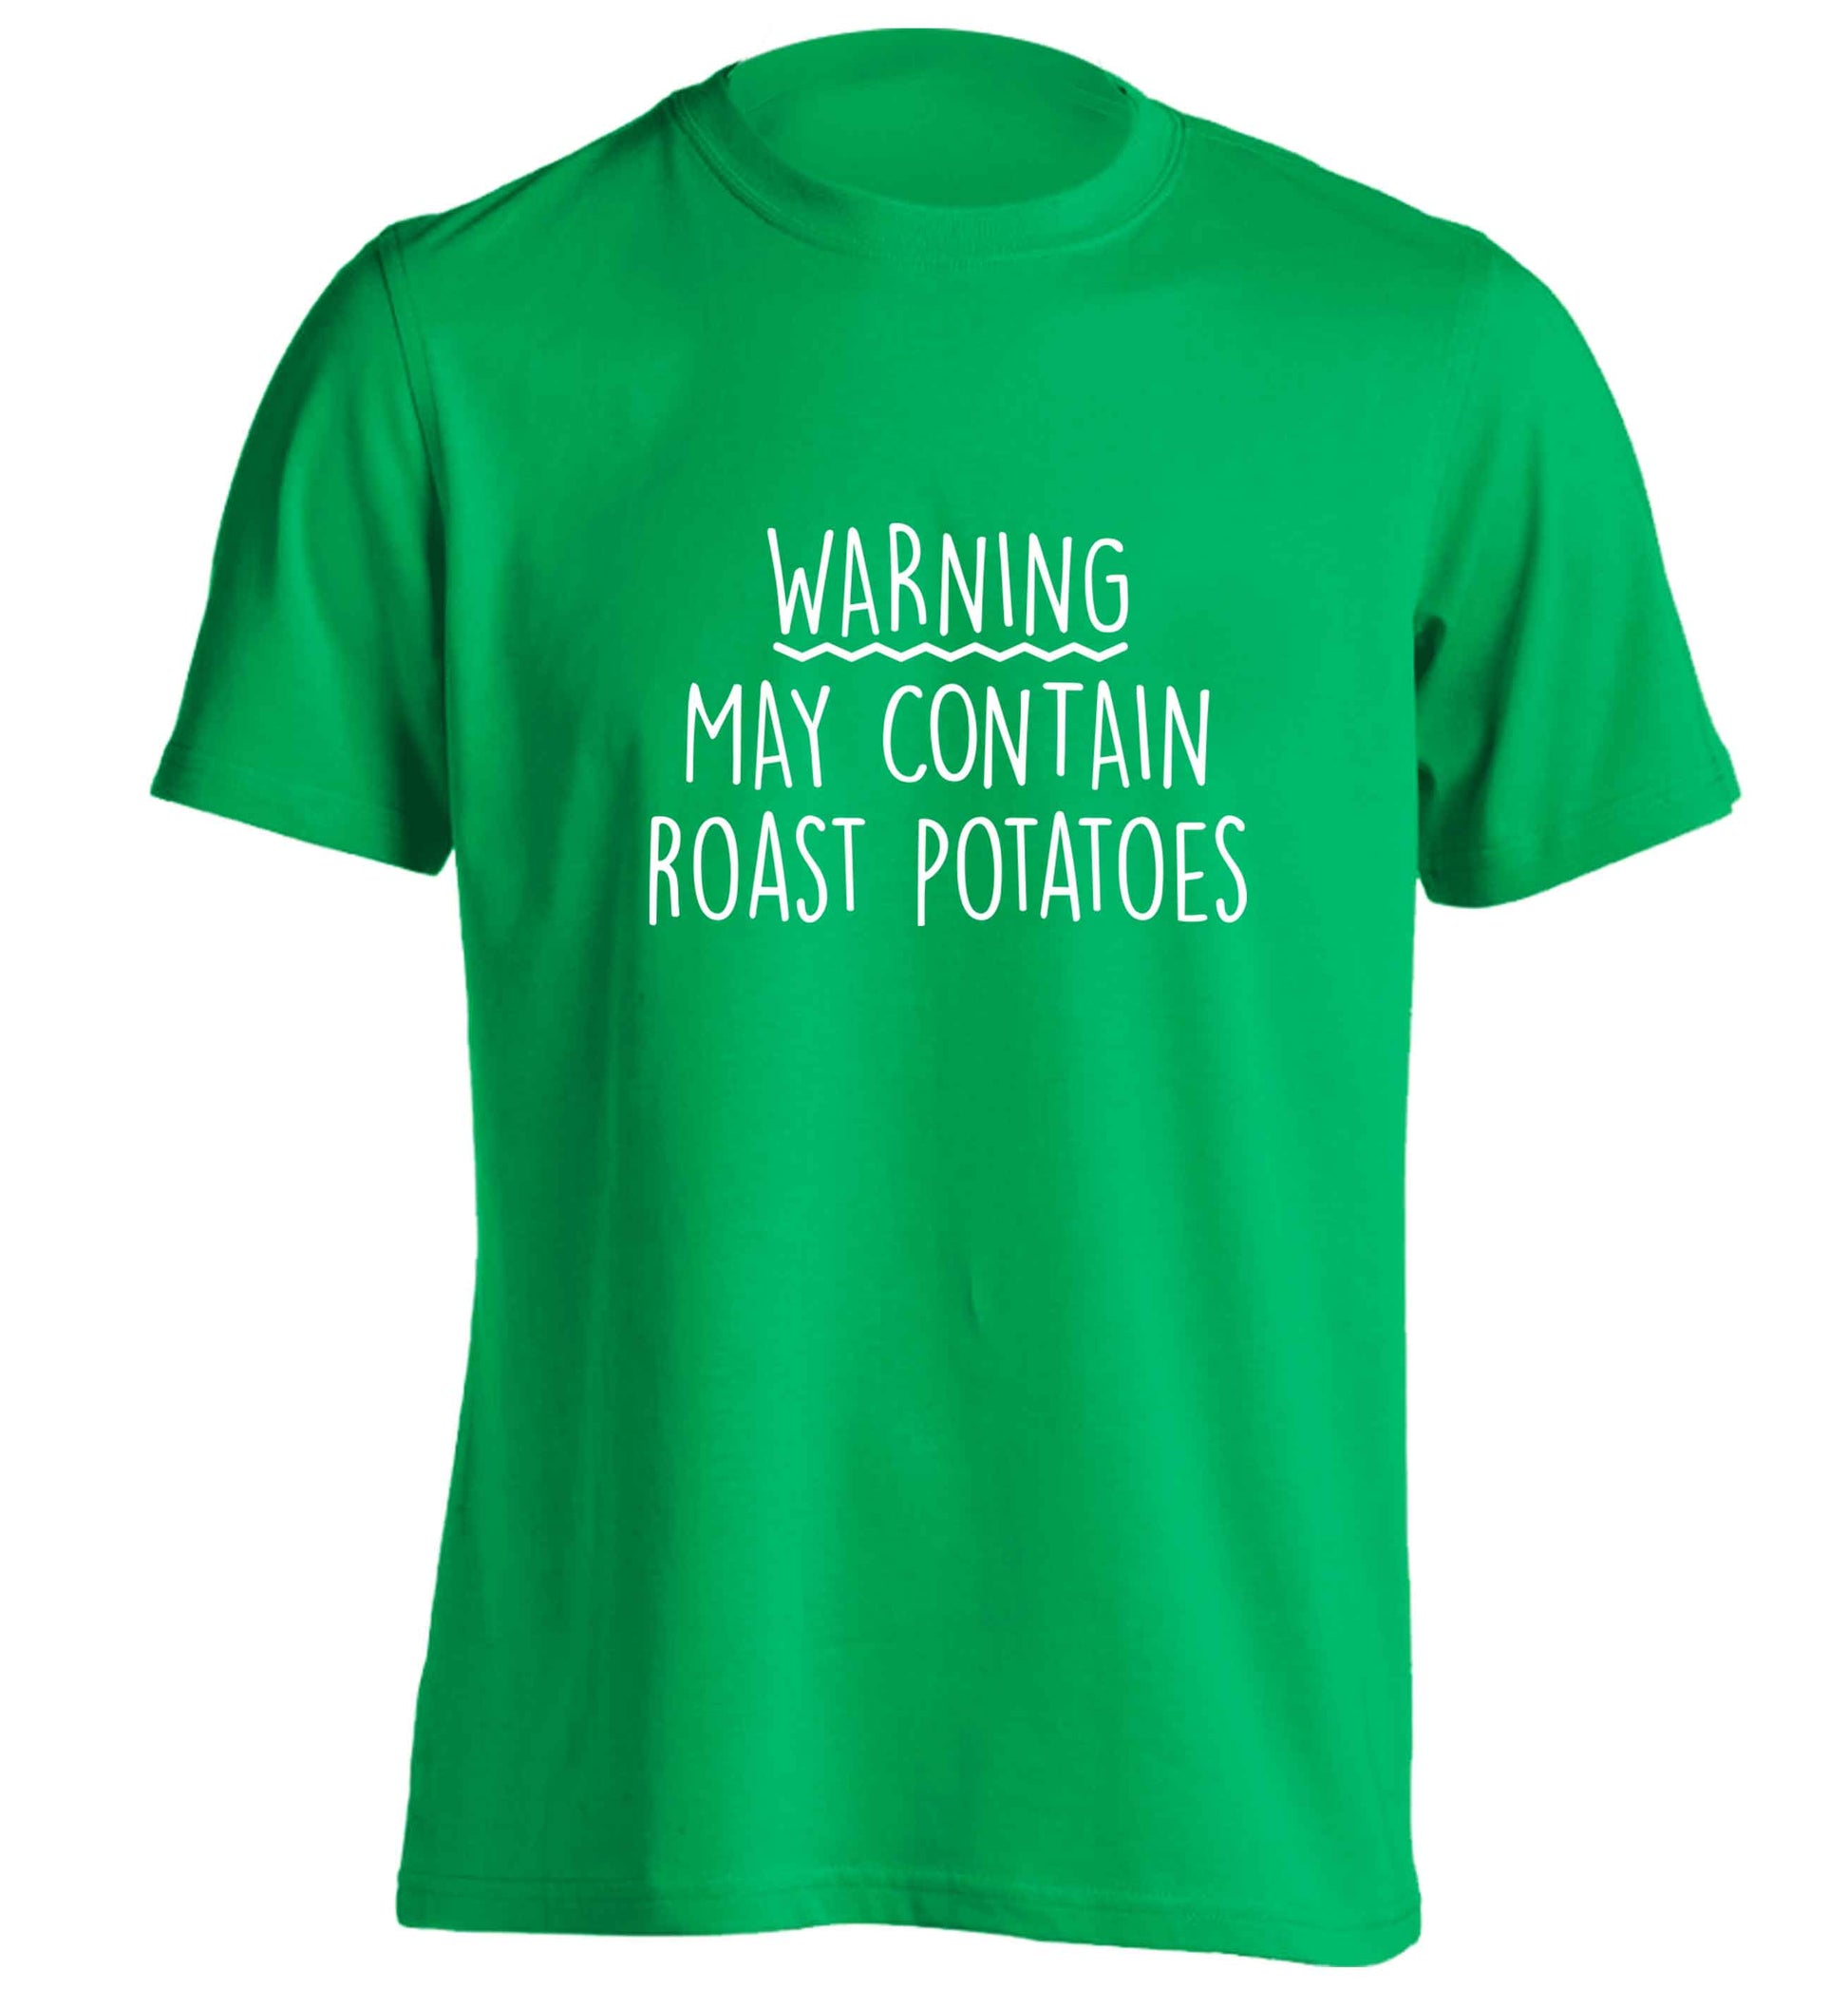 Warning may containg roast potatoes adults unisex green Tshirt 2XL